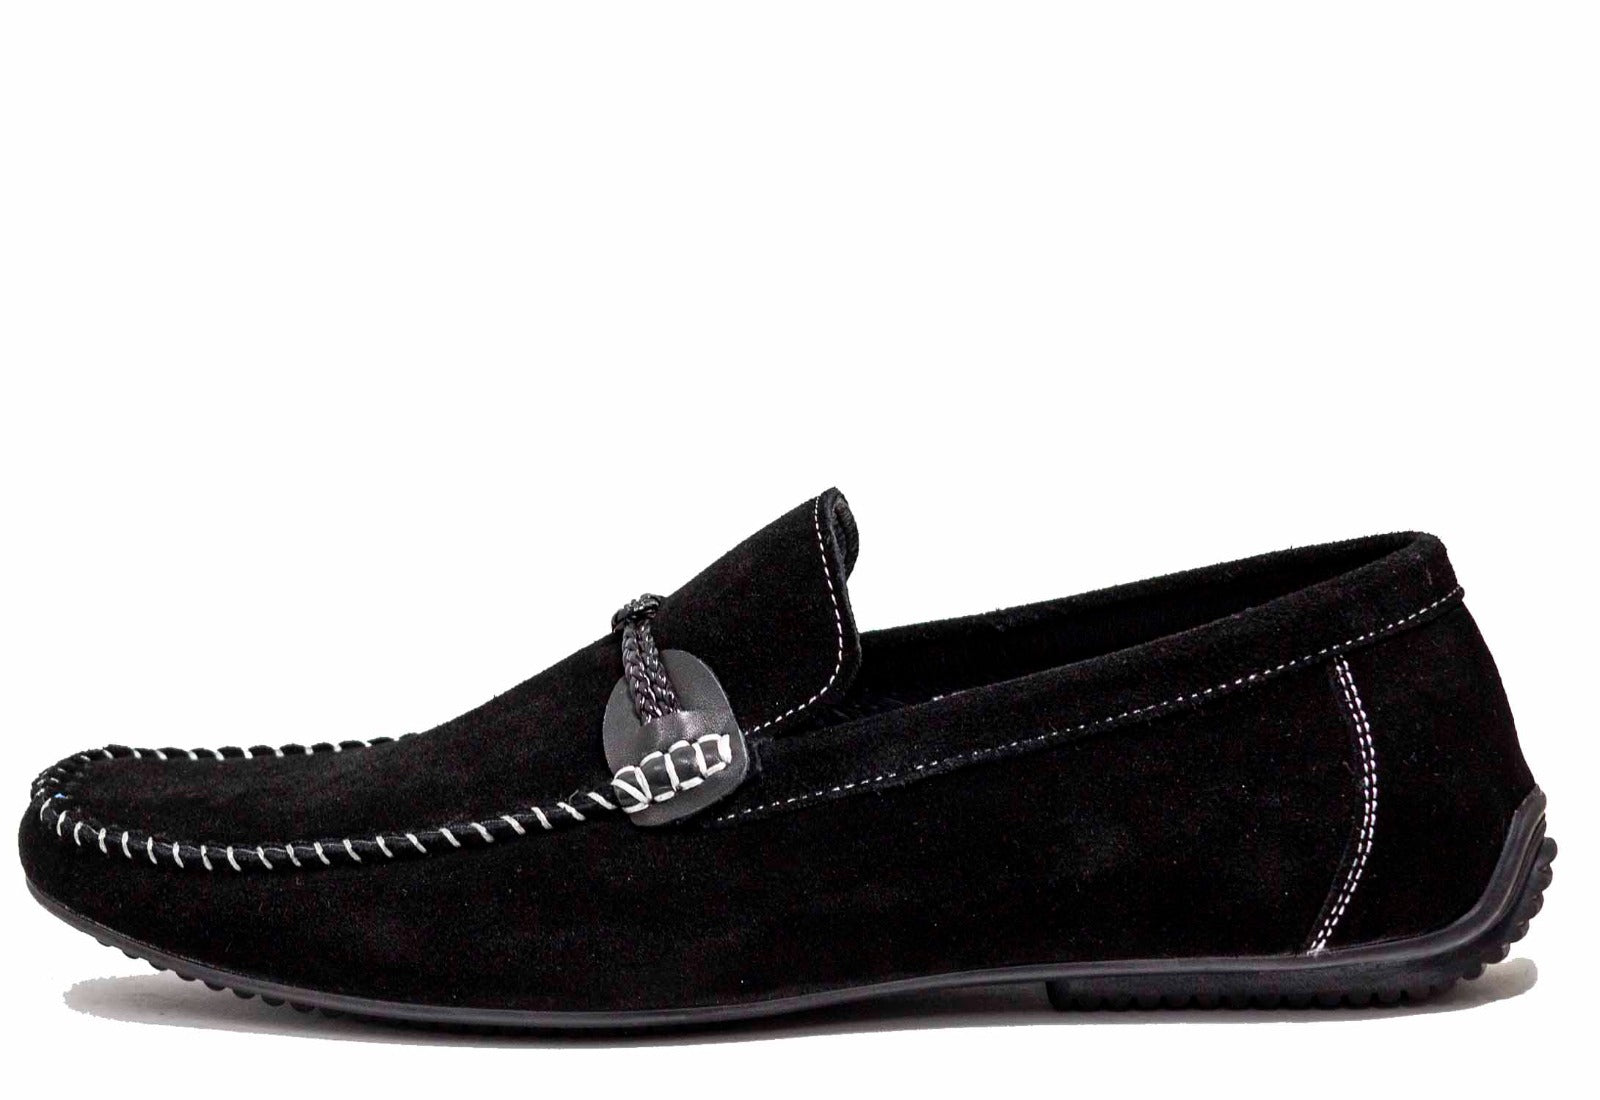 Men's Black Suede Loafer/Woven Strap 2060-051A